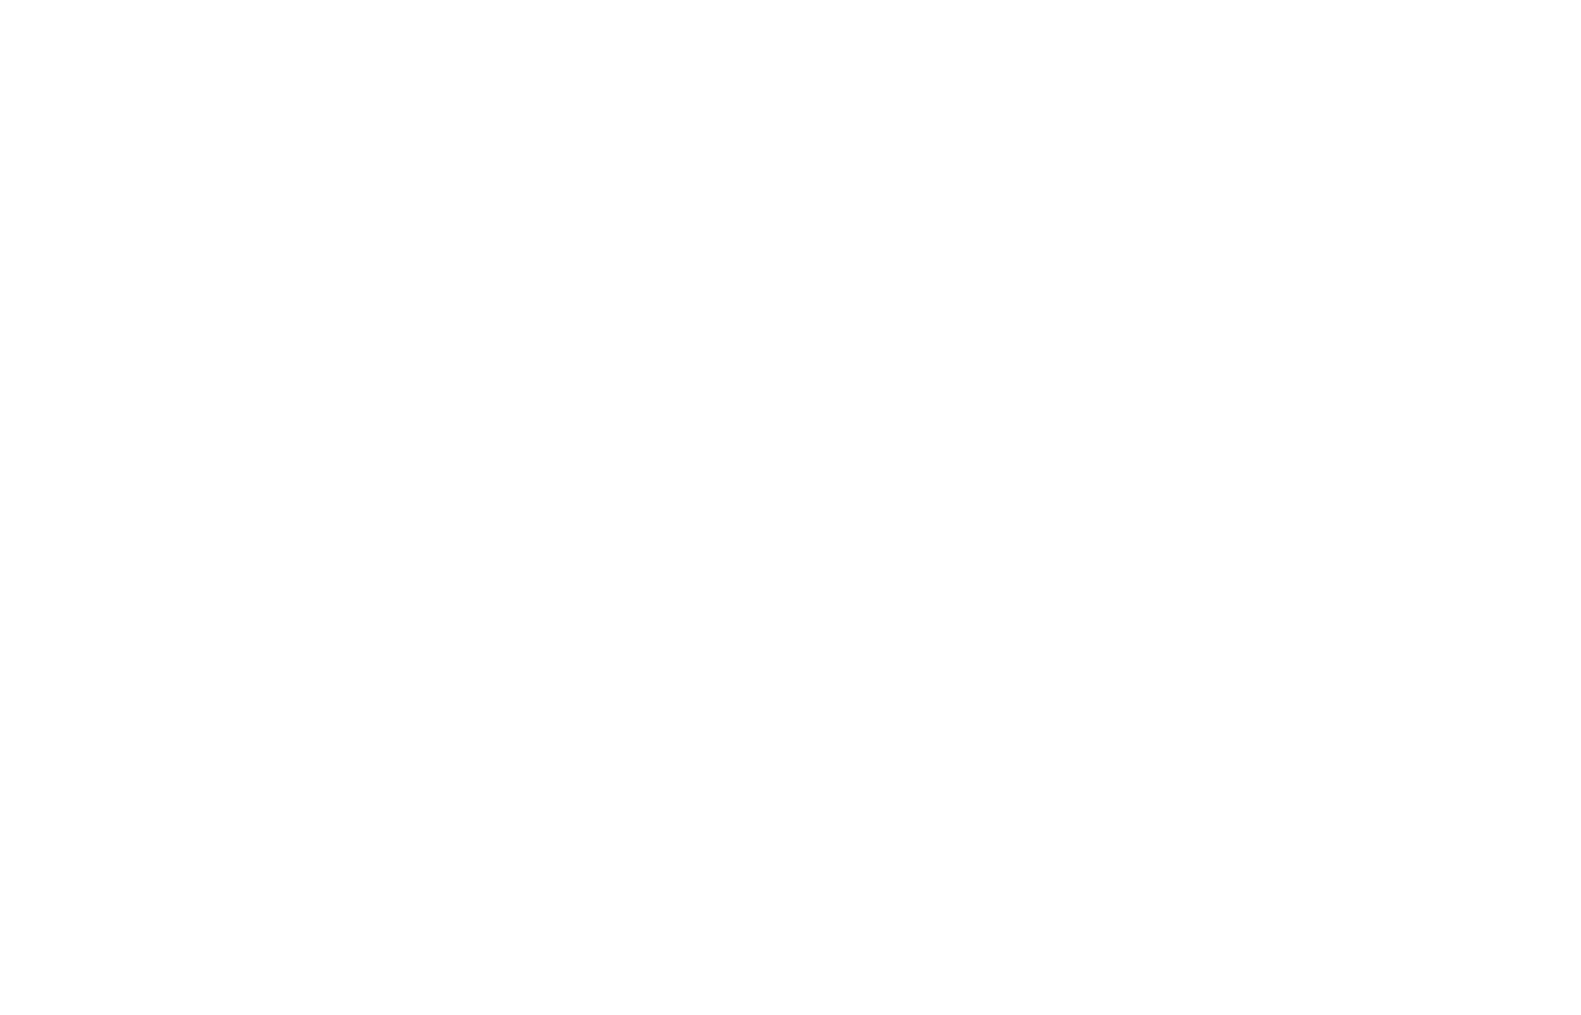 Equity LifeStyle Properties logo pour fonds sombres (PNG transparent)